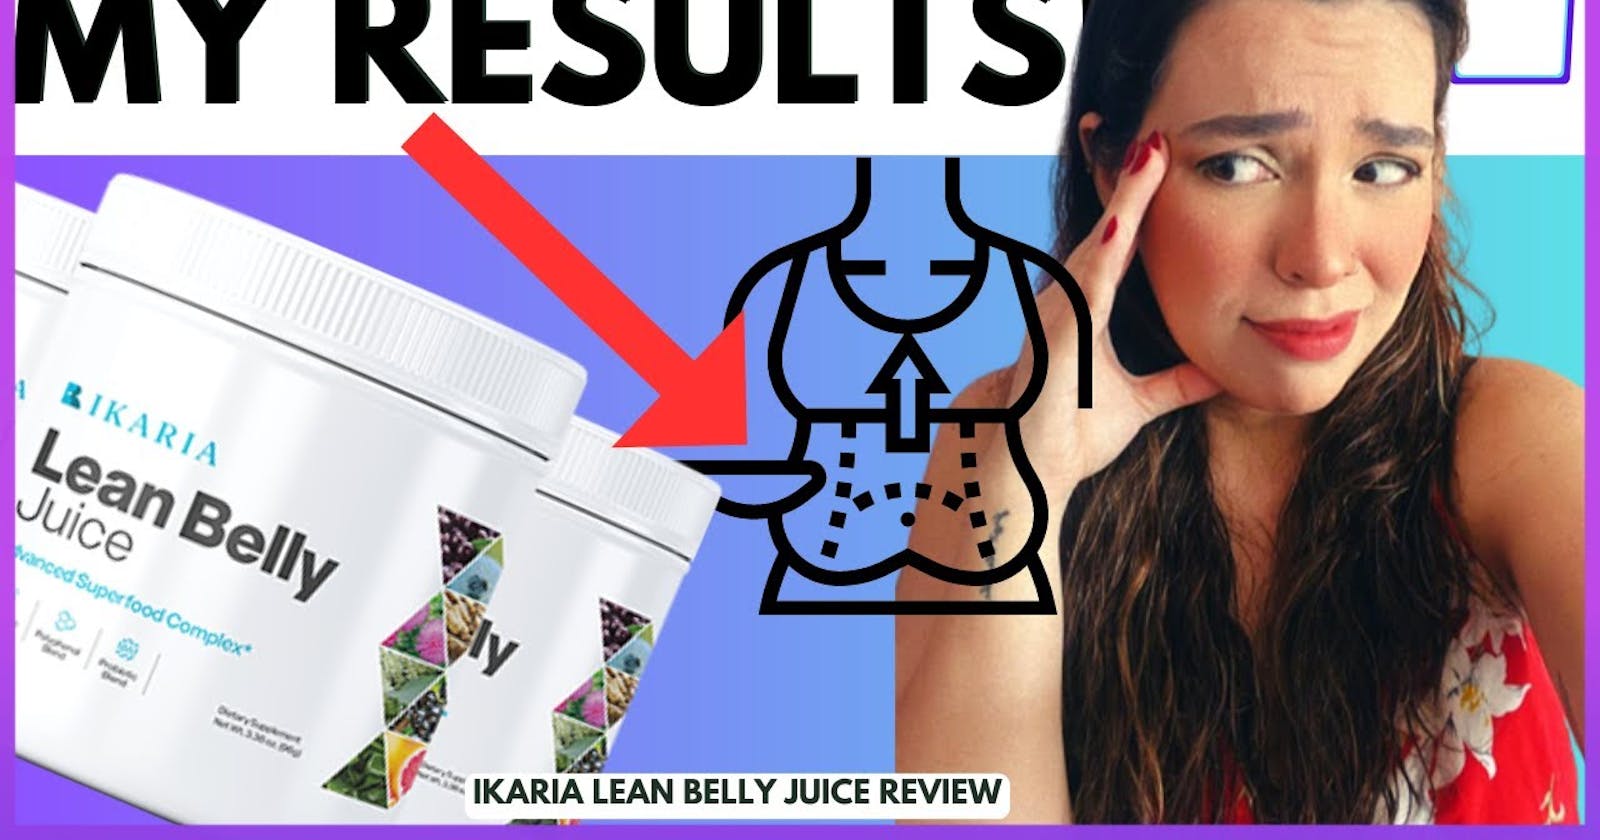 Ikaria Lean Belly Juice Reviews {Warnings}: Scam, Side Effects, Does It Work?